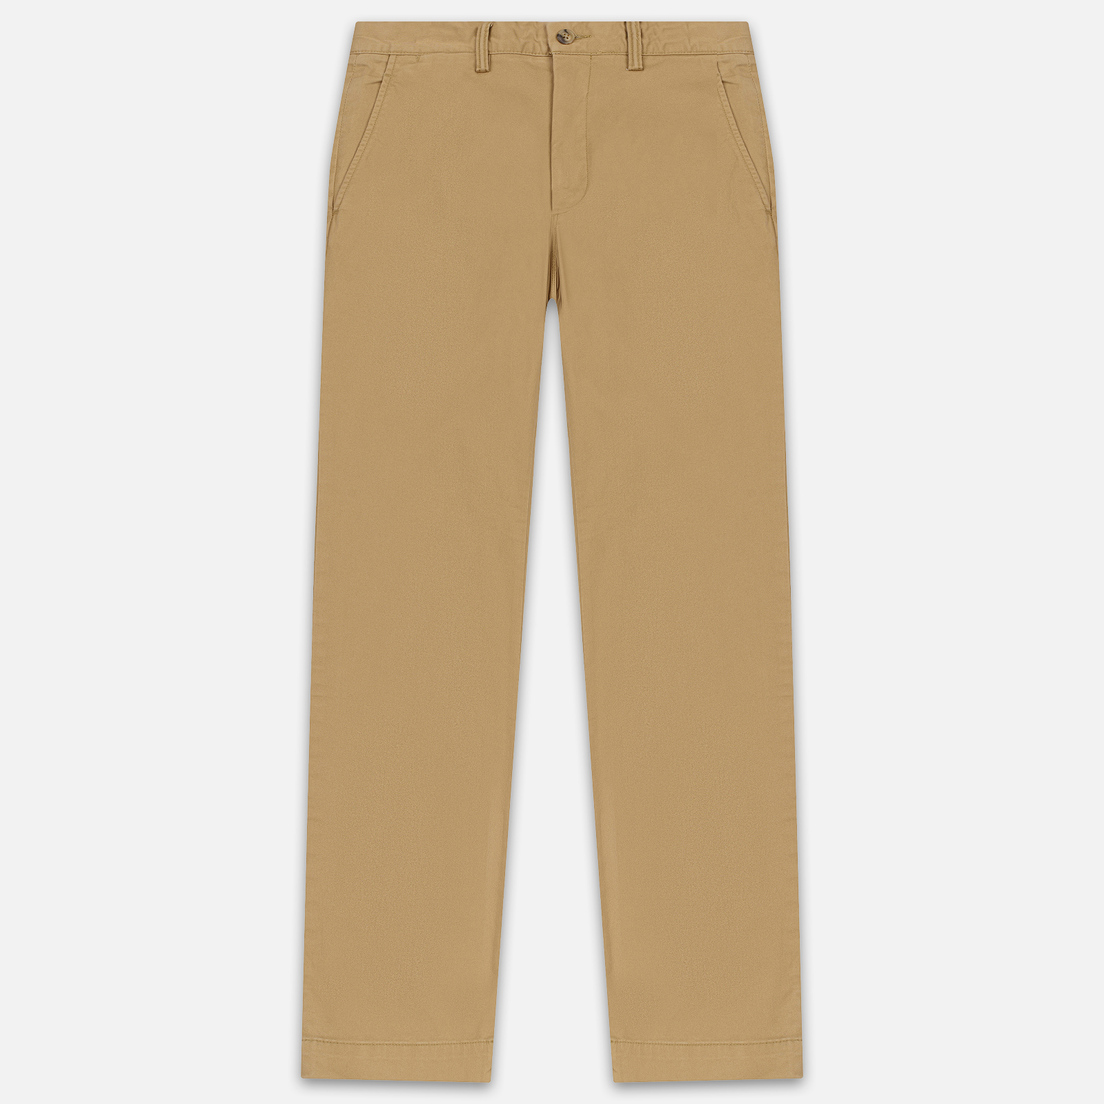 Polo Ralph Lauren Мужские брюки Slim Fit Bedford